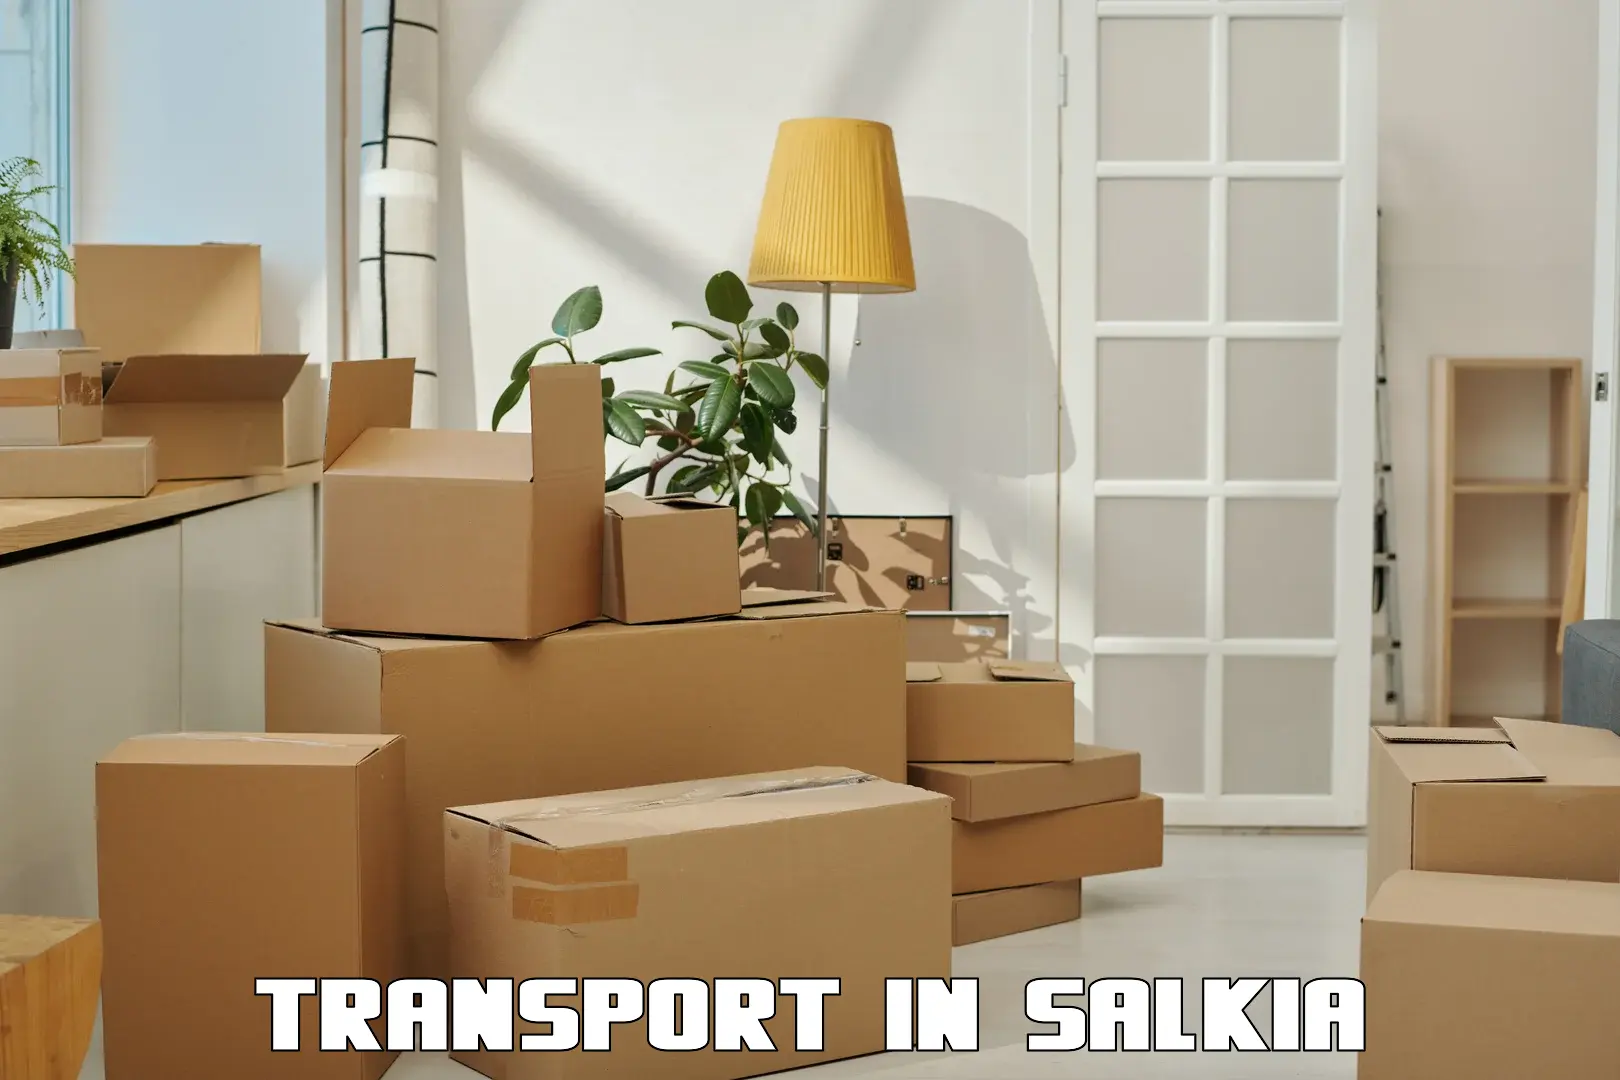 Transportation services in Salkia